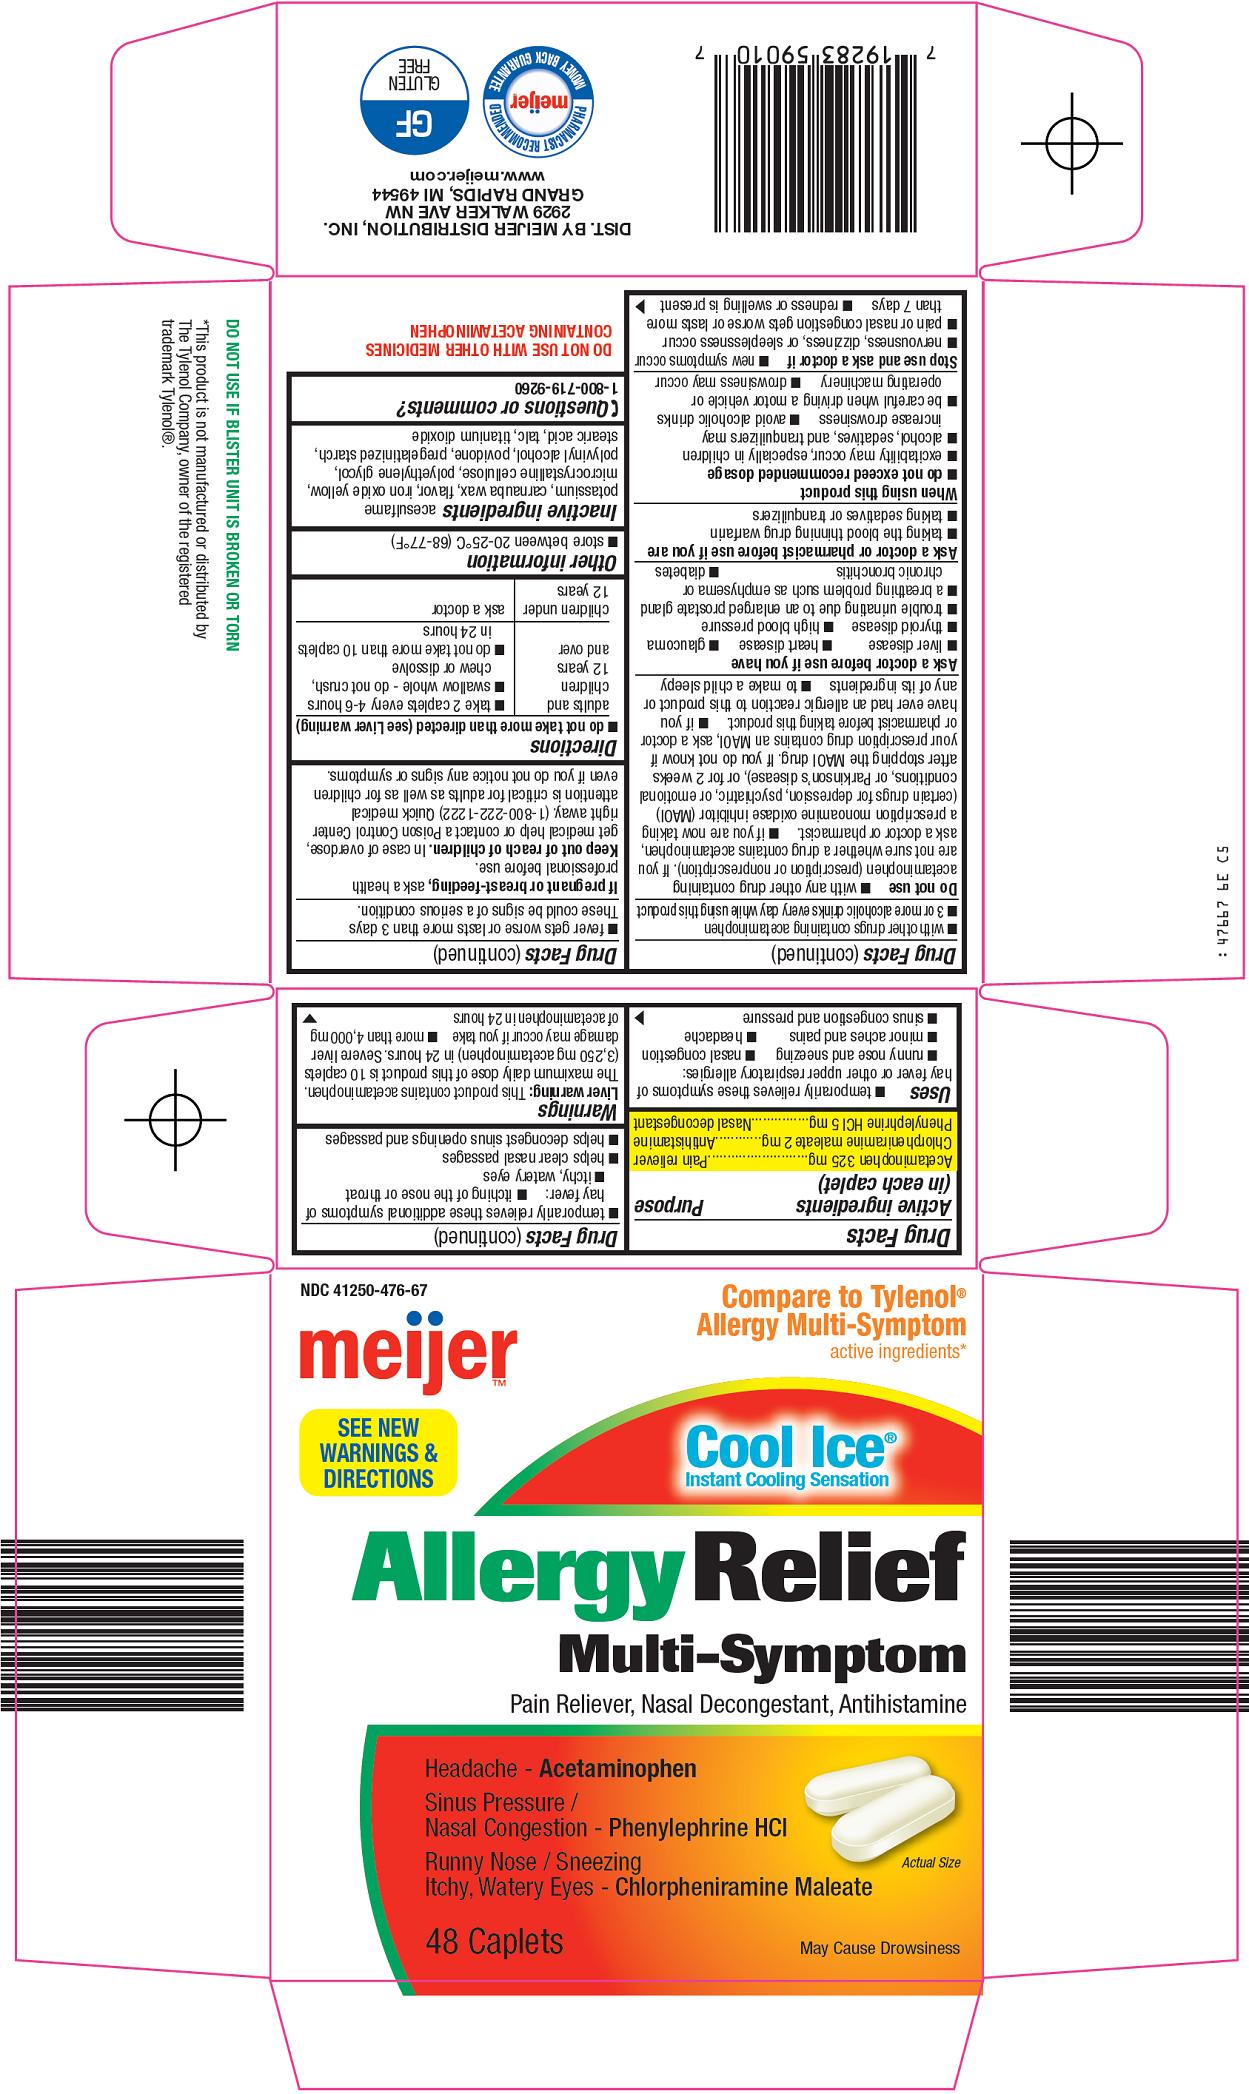 Allergy Relief Carton Image